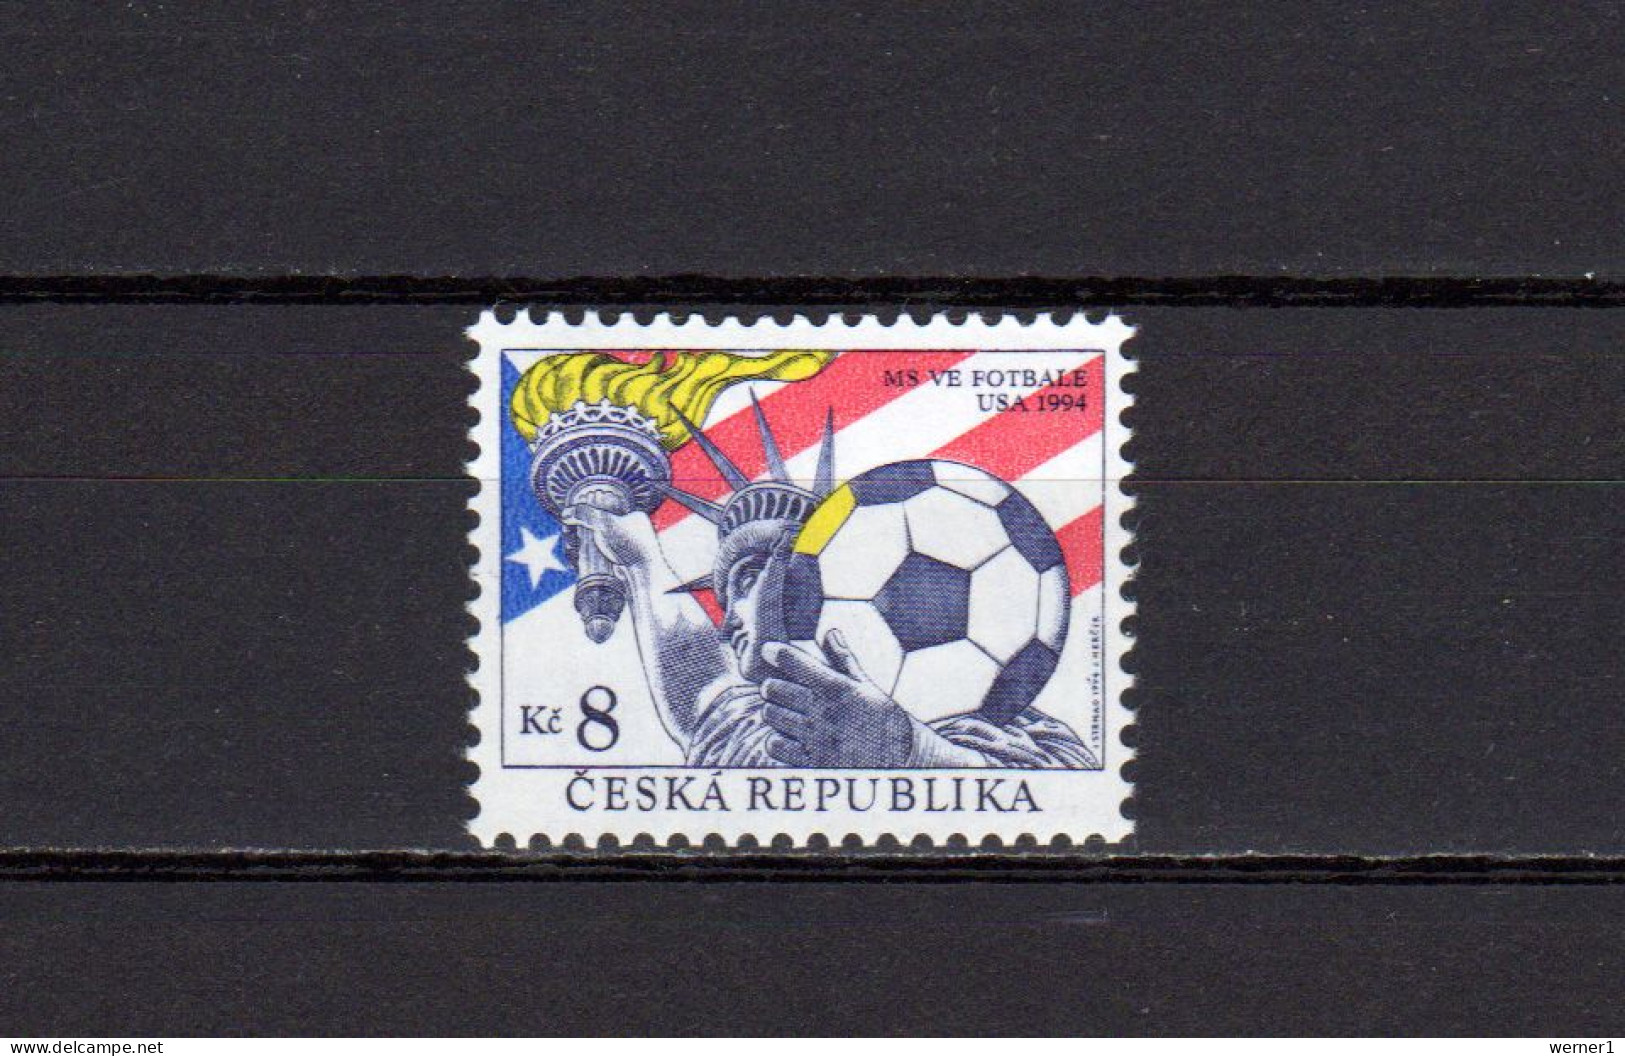 Czech Republic 1994 Football Soccer World Cup Stamp MNH - 1994 – Estados Unidos